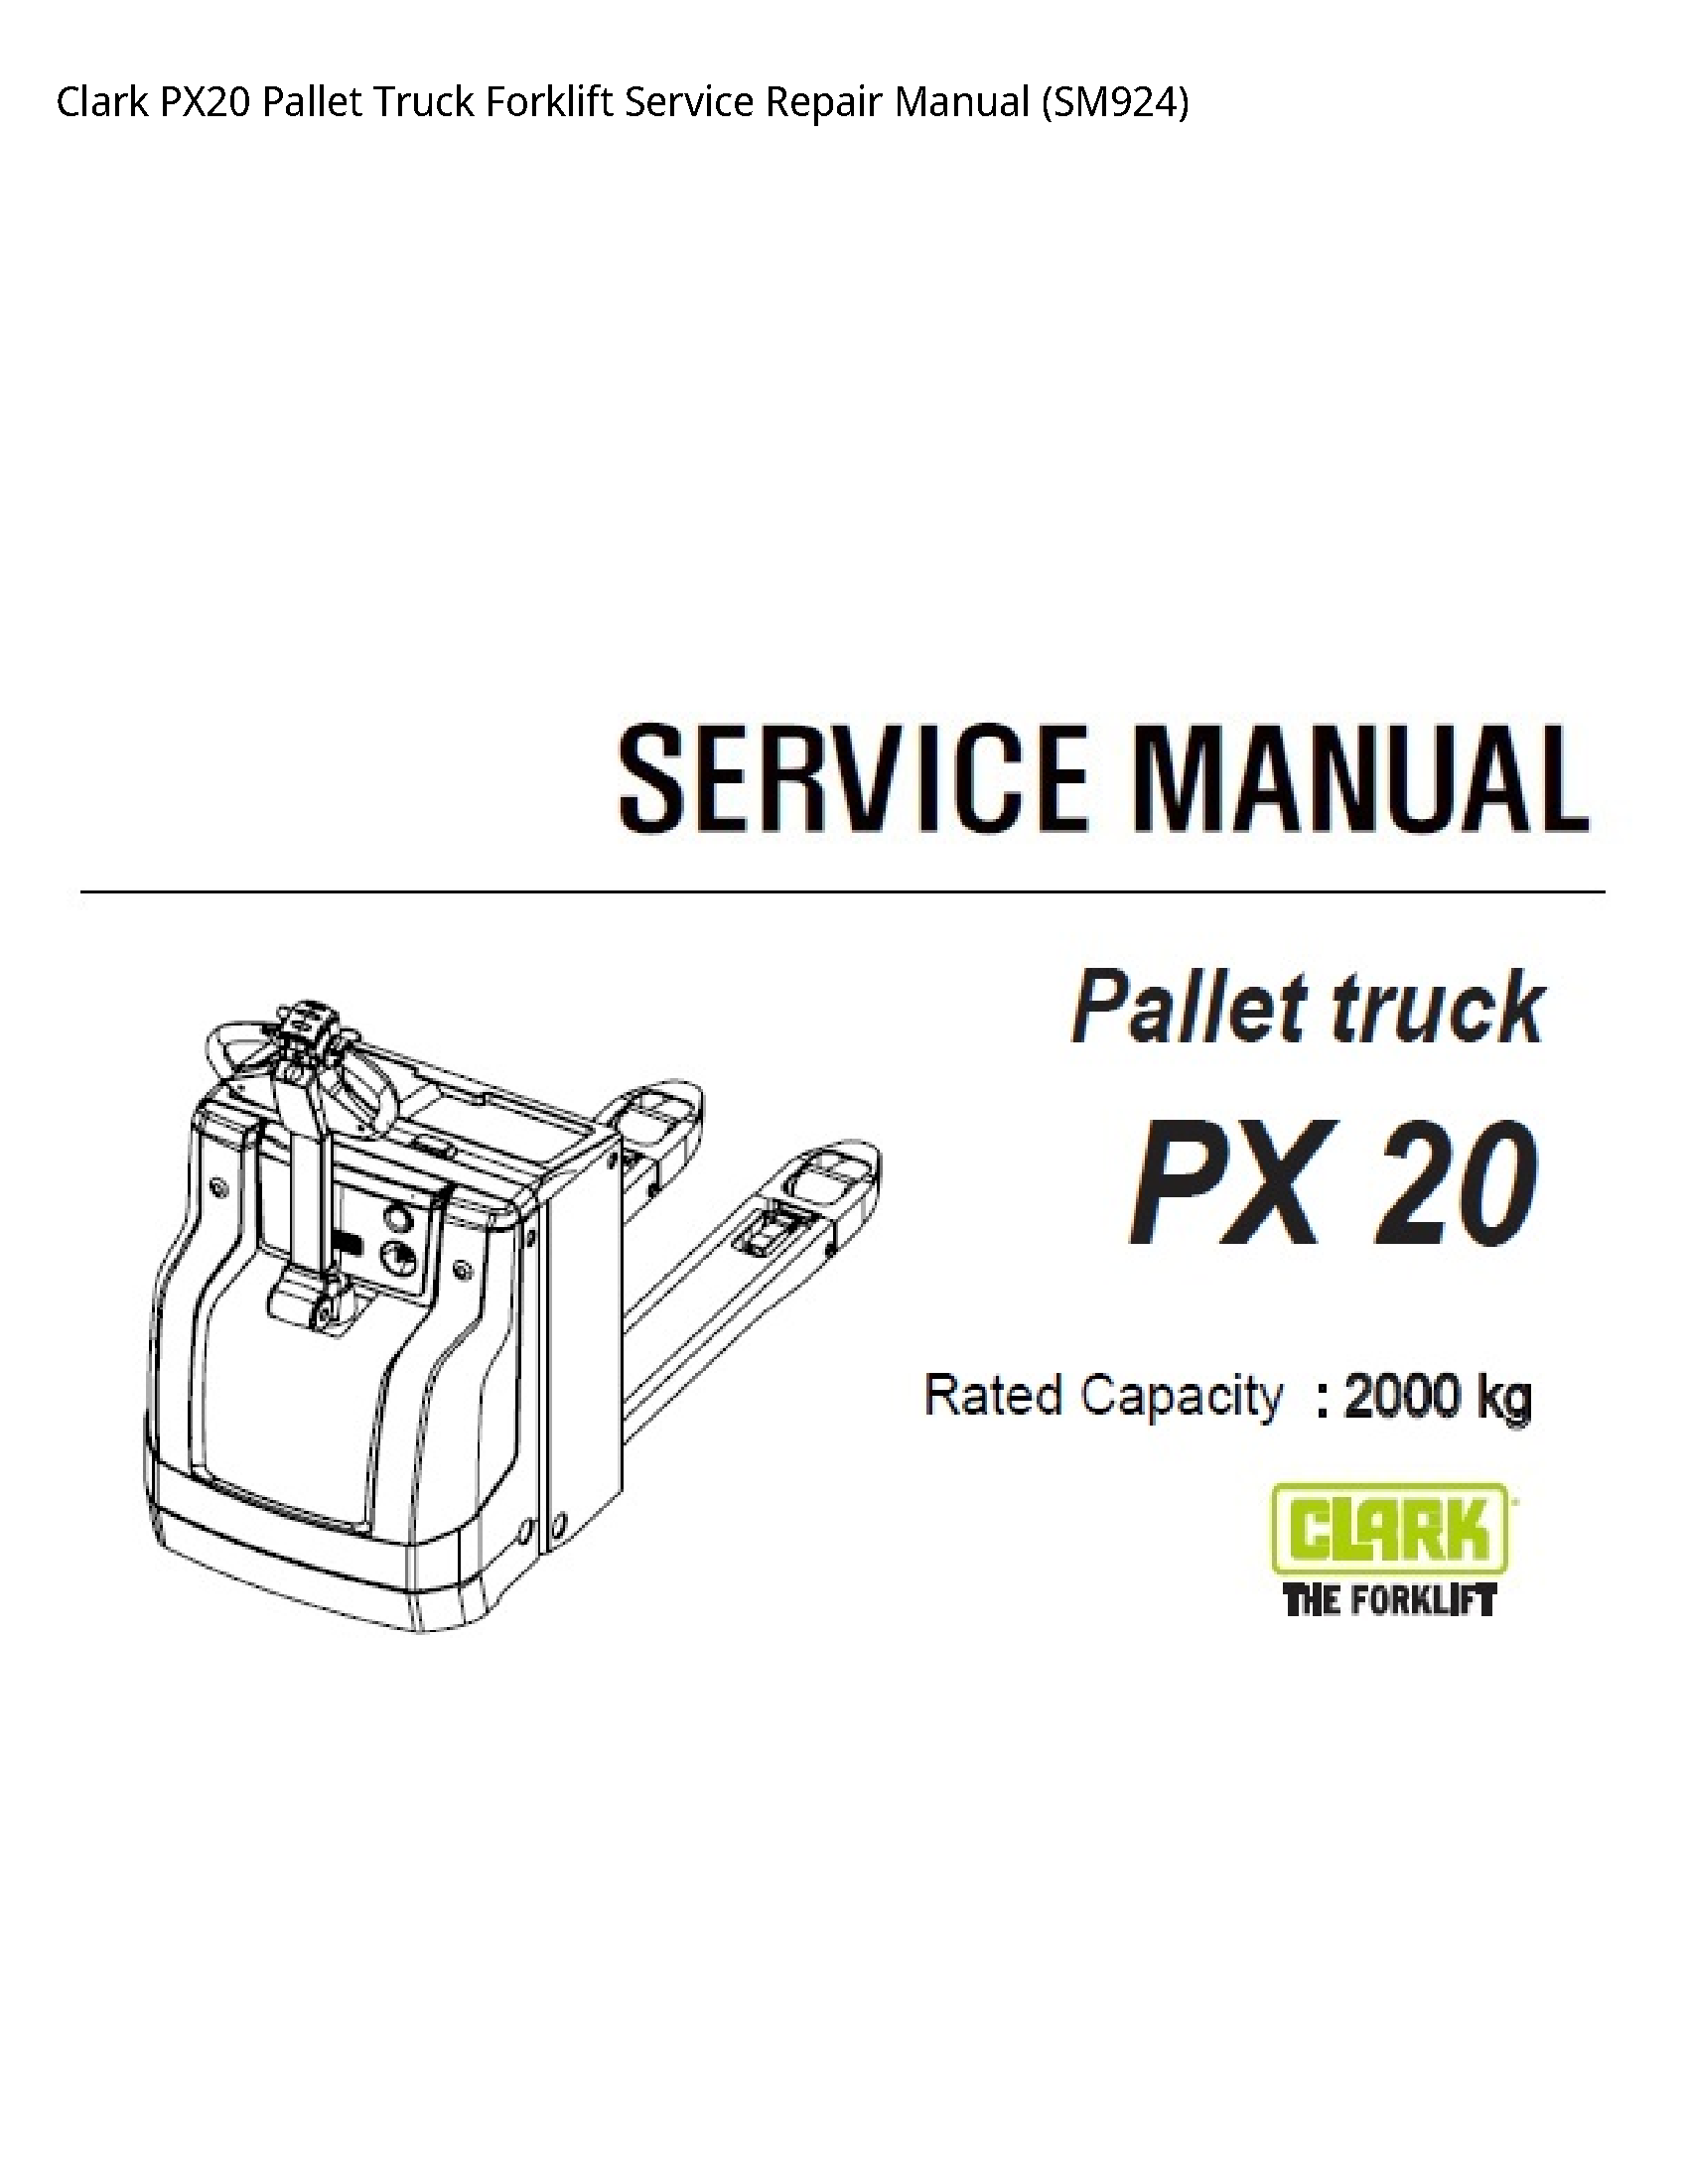 Clark PX20 Pallet Truck Forklift manual